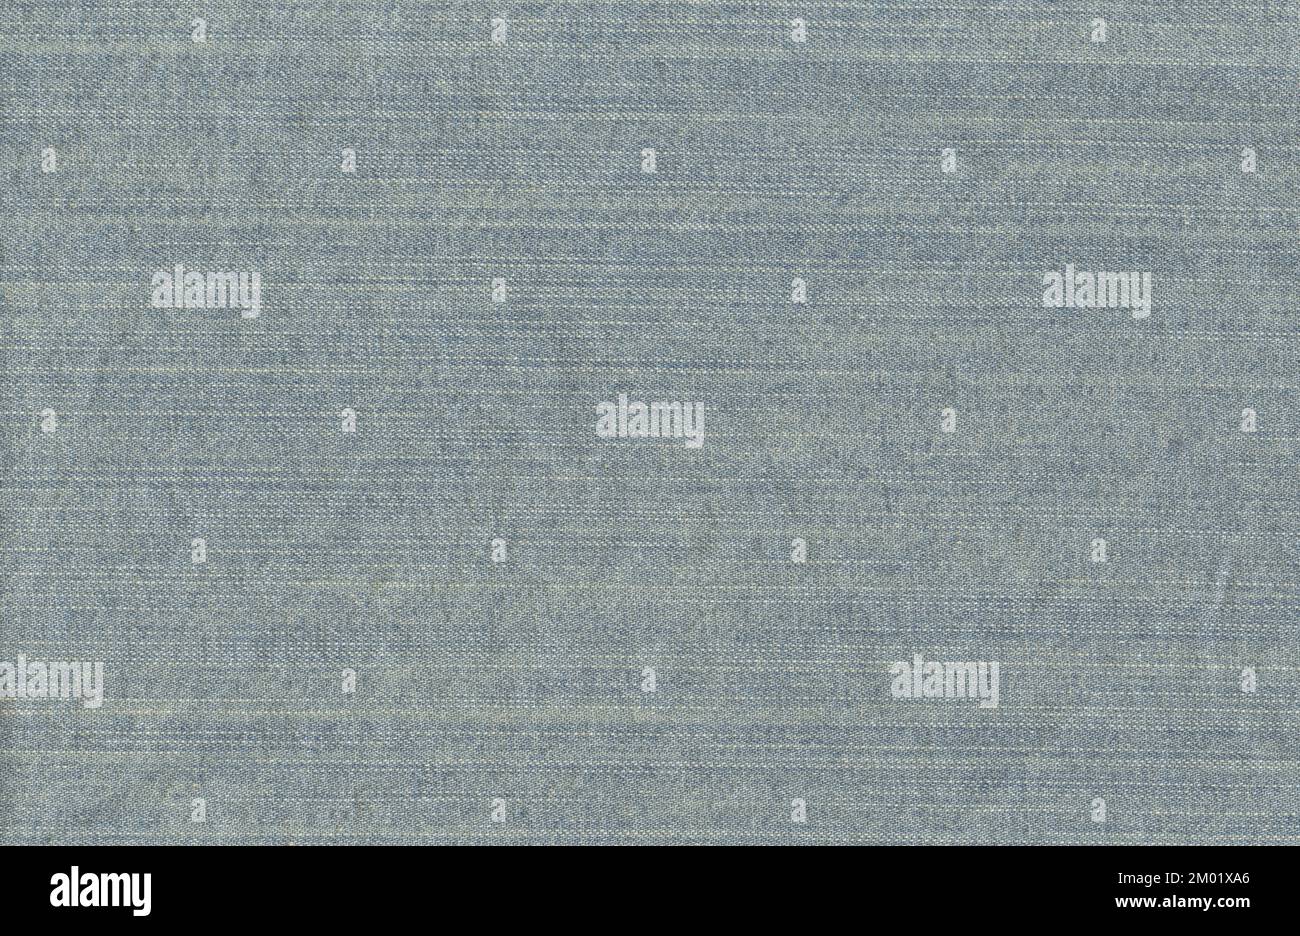 Denim Textures, seamless fabric Texture Stock Photo - Alamy